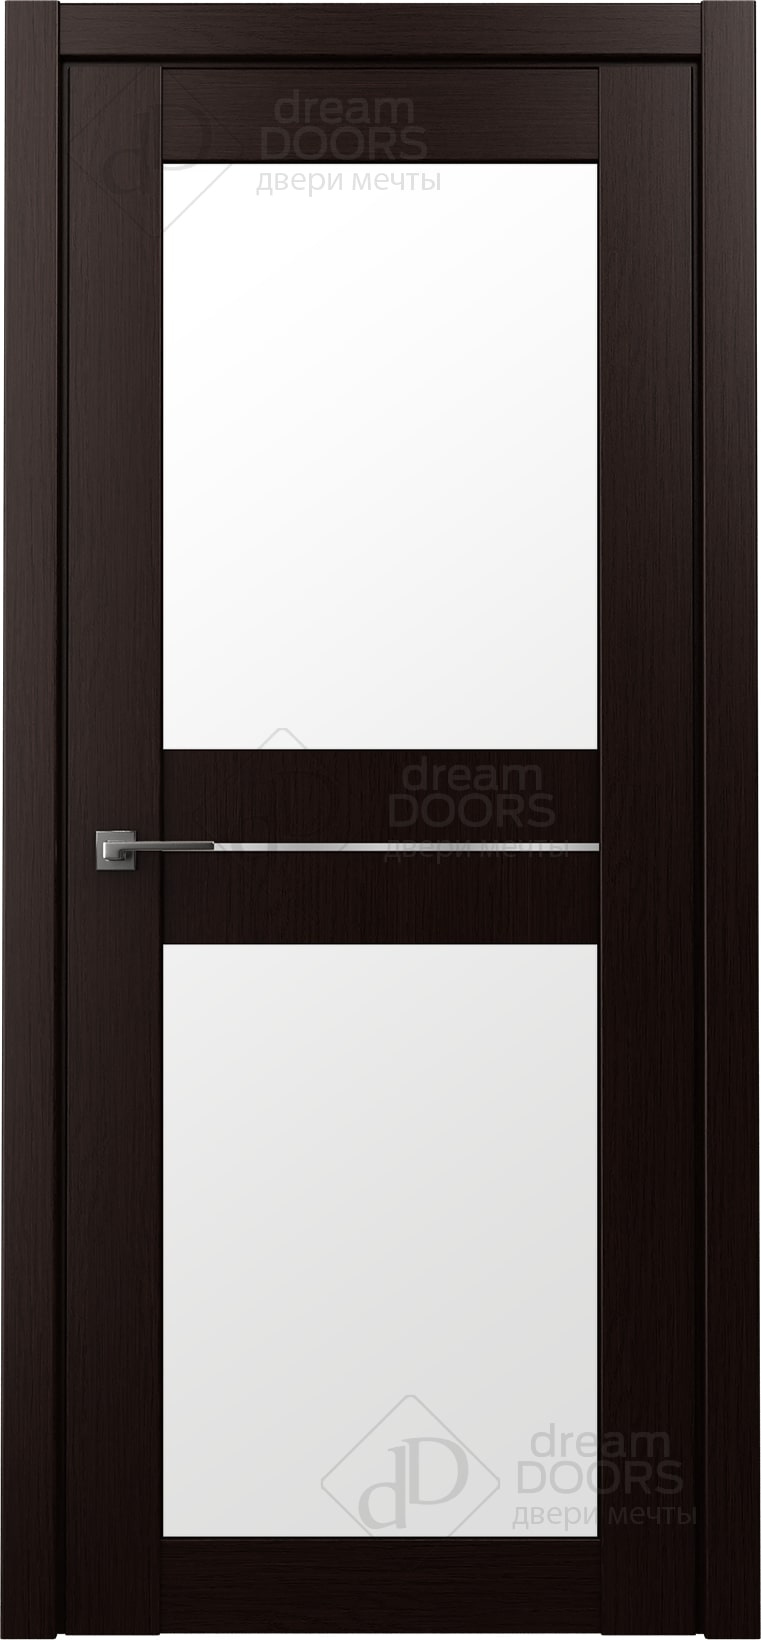 Dream Doors Межкомнатная дверь Престиж 2, арт. 16431 - фото №9